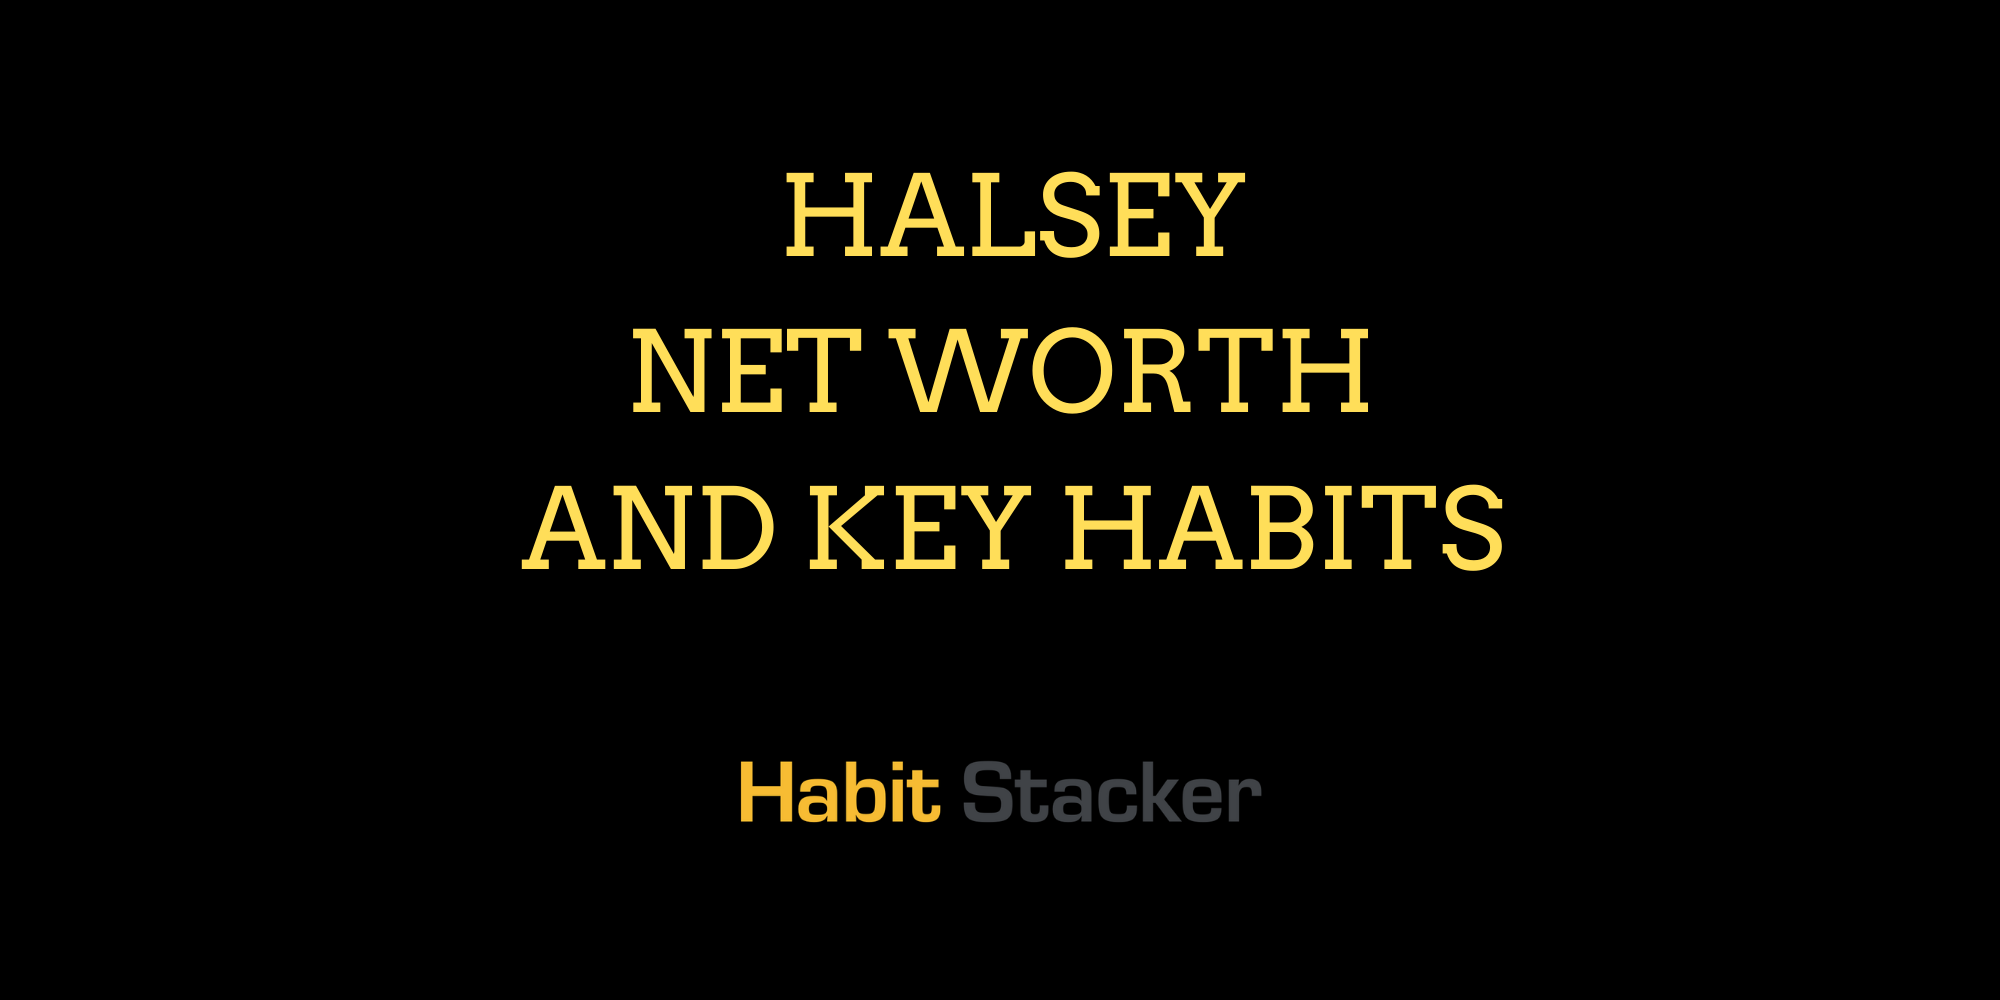 Halsey Net Worth